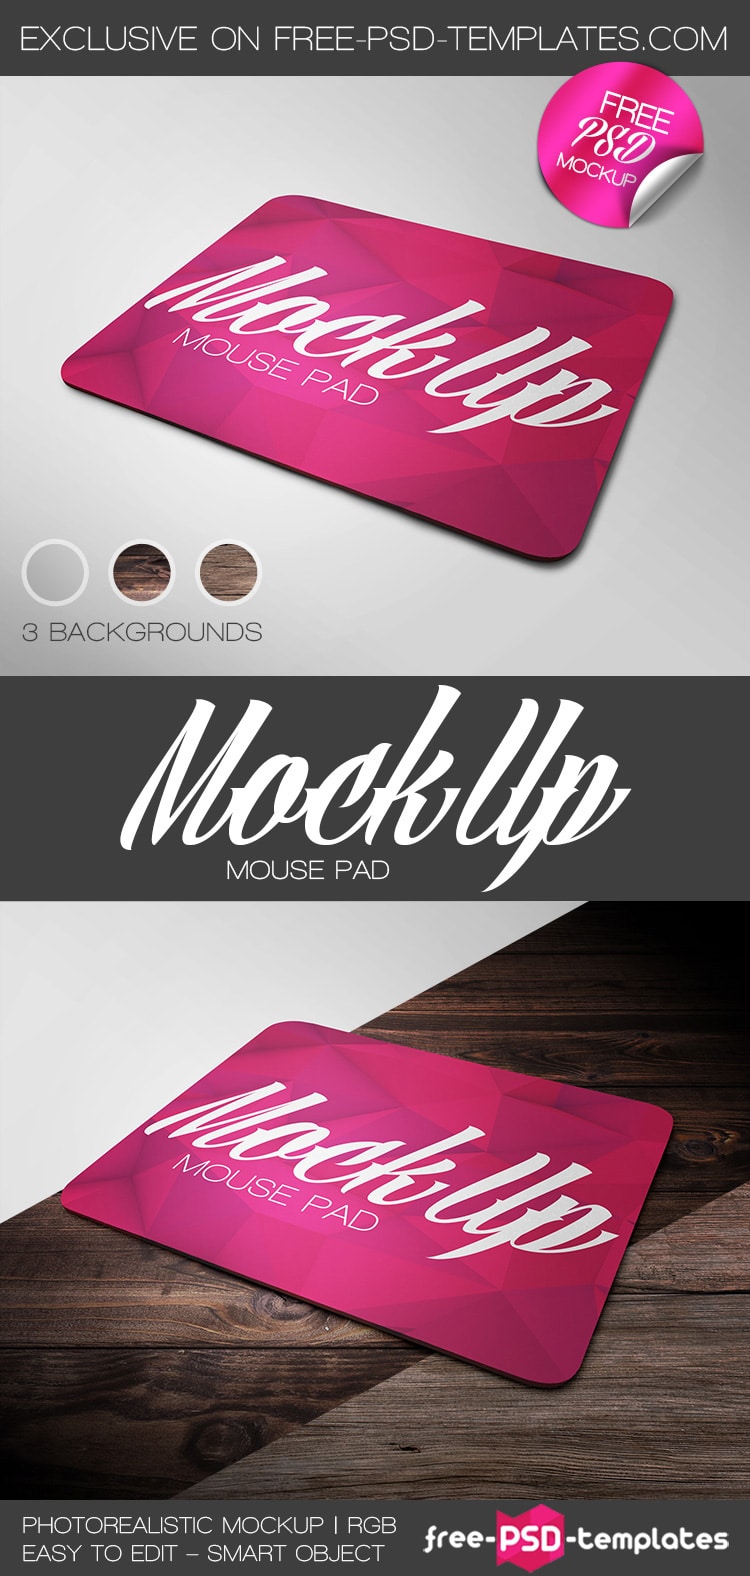 Customizable Mousepad Mockup